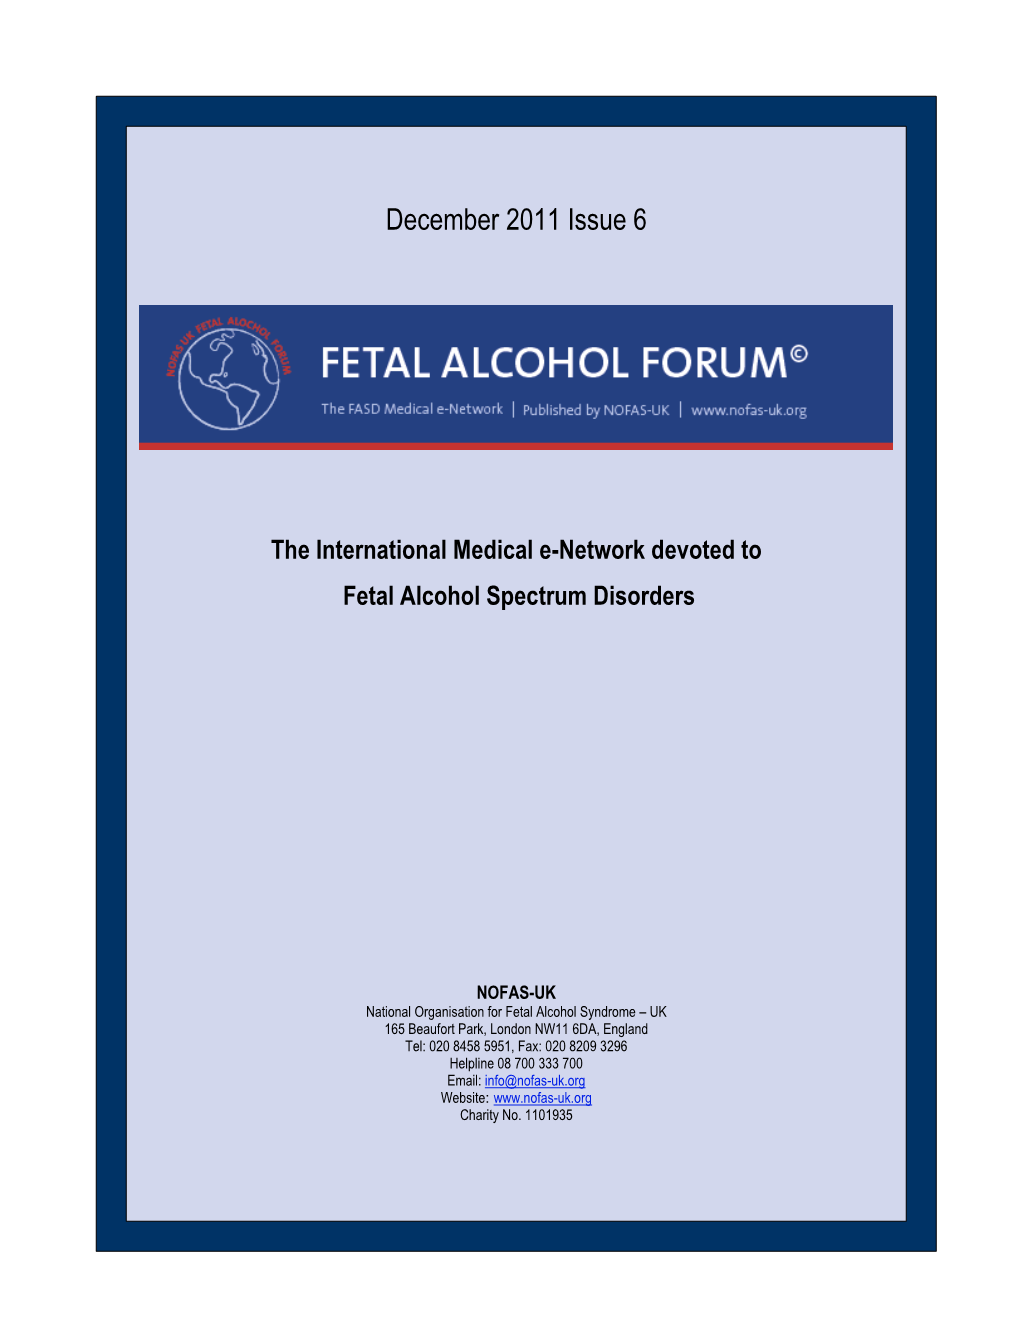 Fetal Alcohol Forum Issue 6